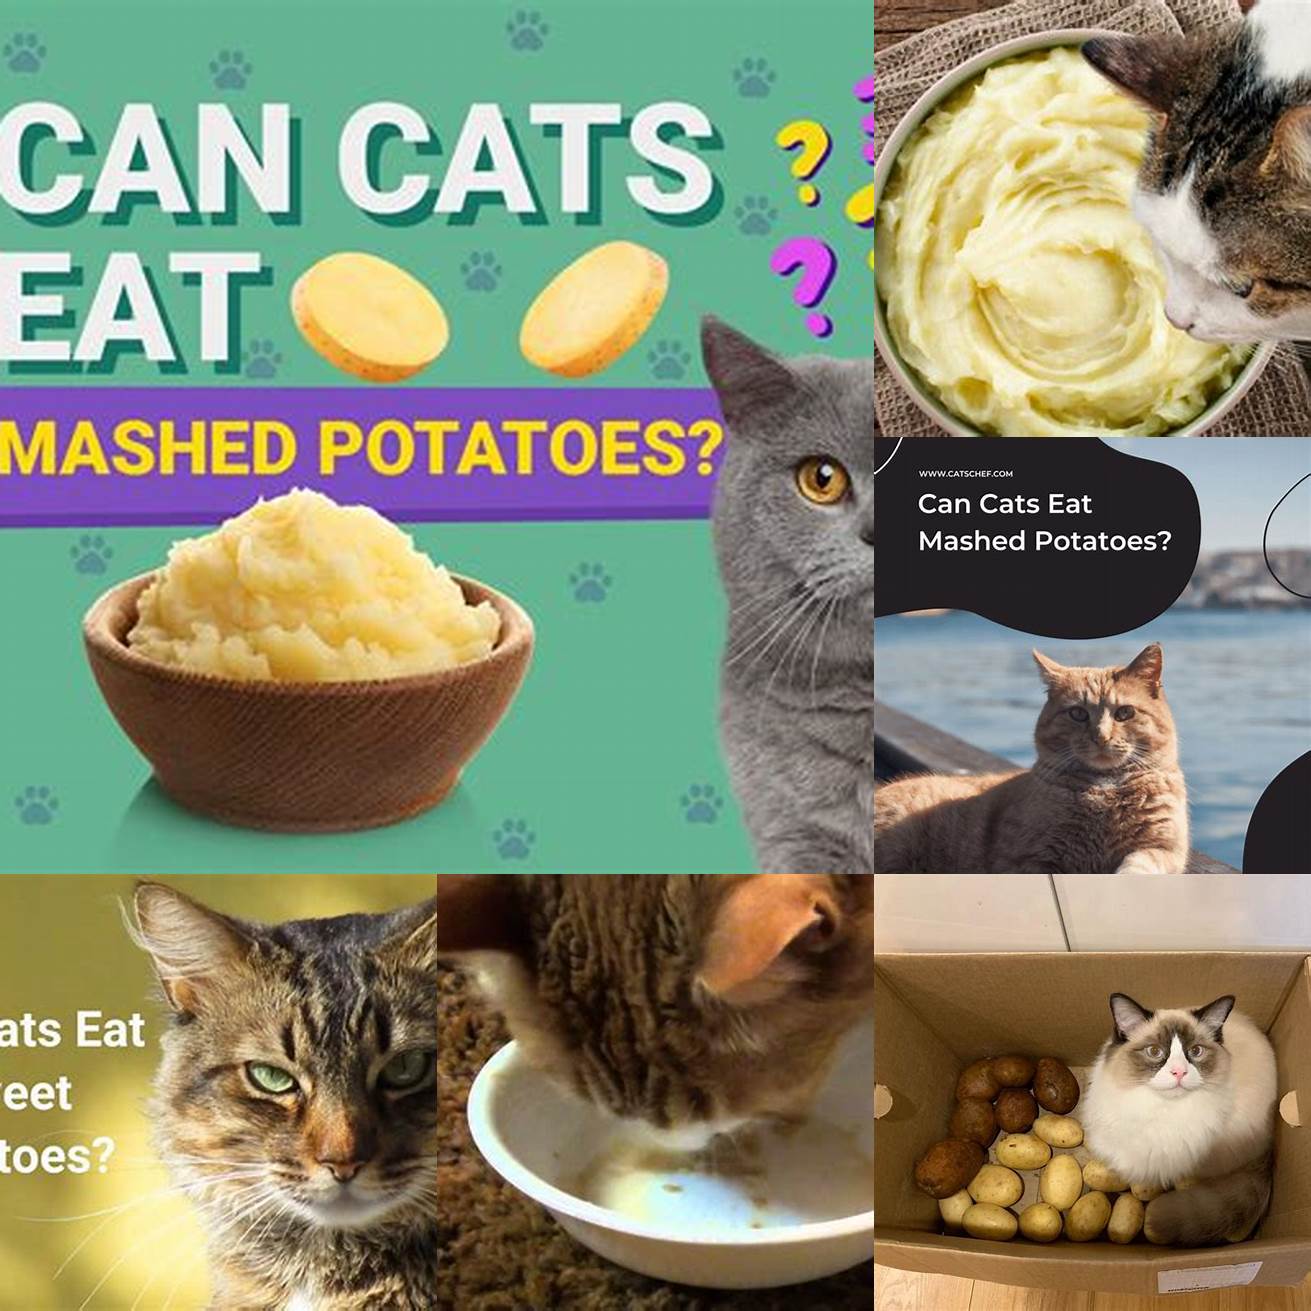 Q Can cats eat mashed potatoes